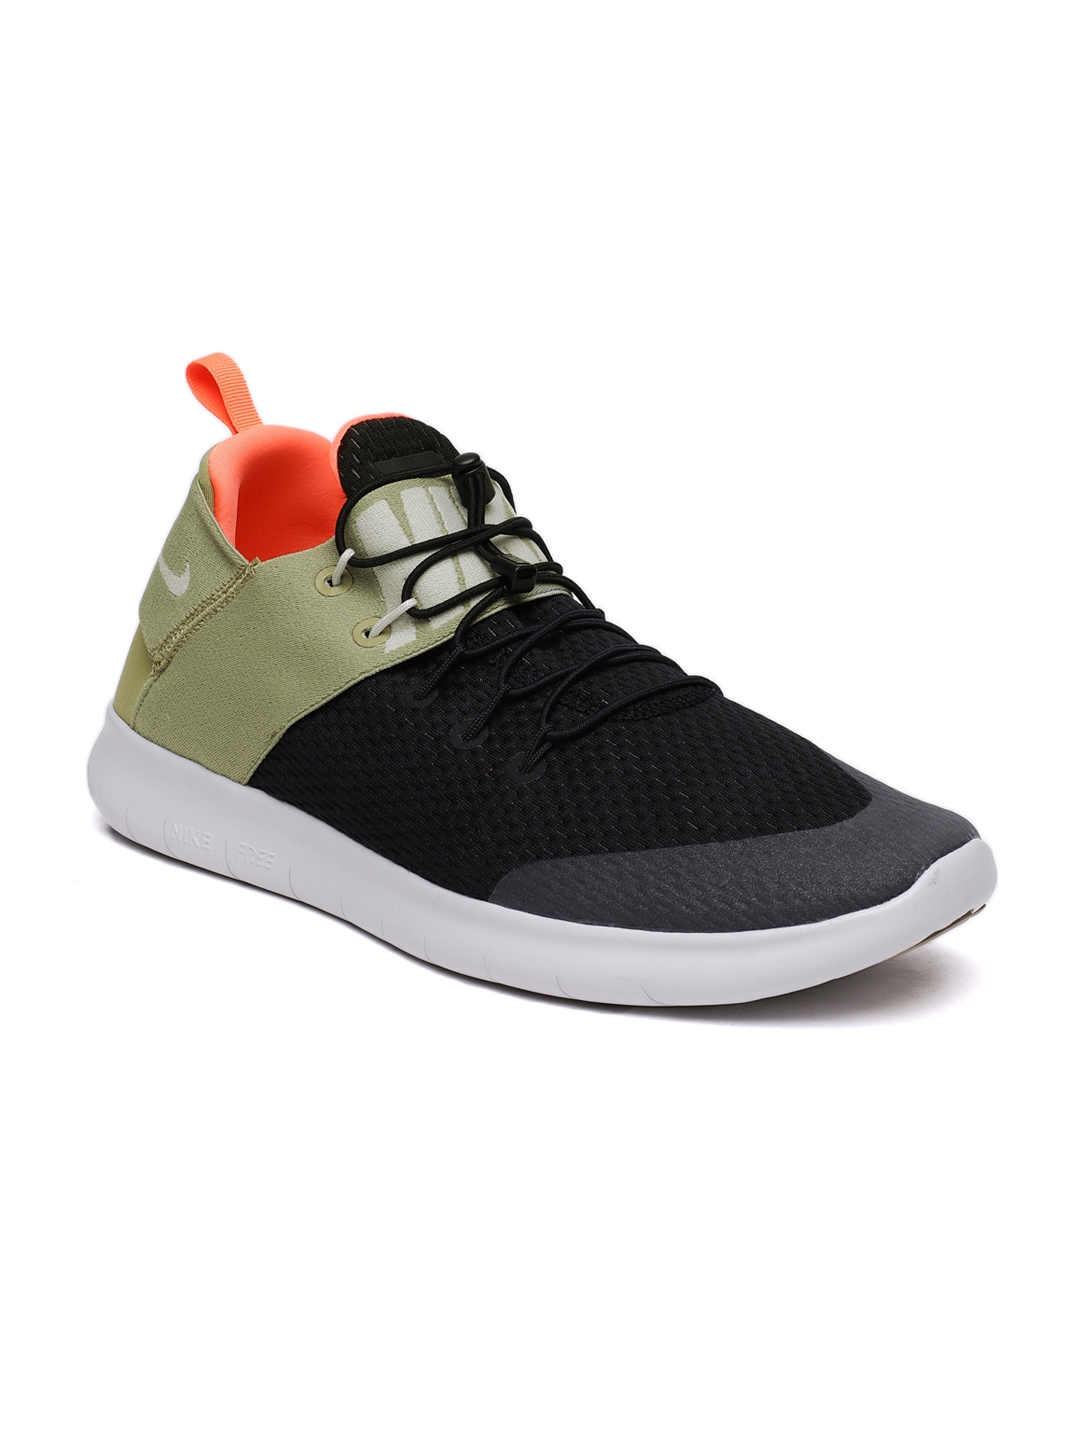 Buy Nike Men Black & Olive Green Free RN Commuter Running Shoe - for Men | Myntra